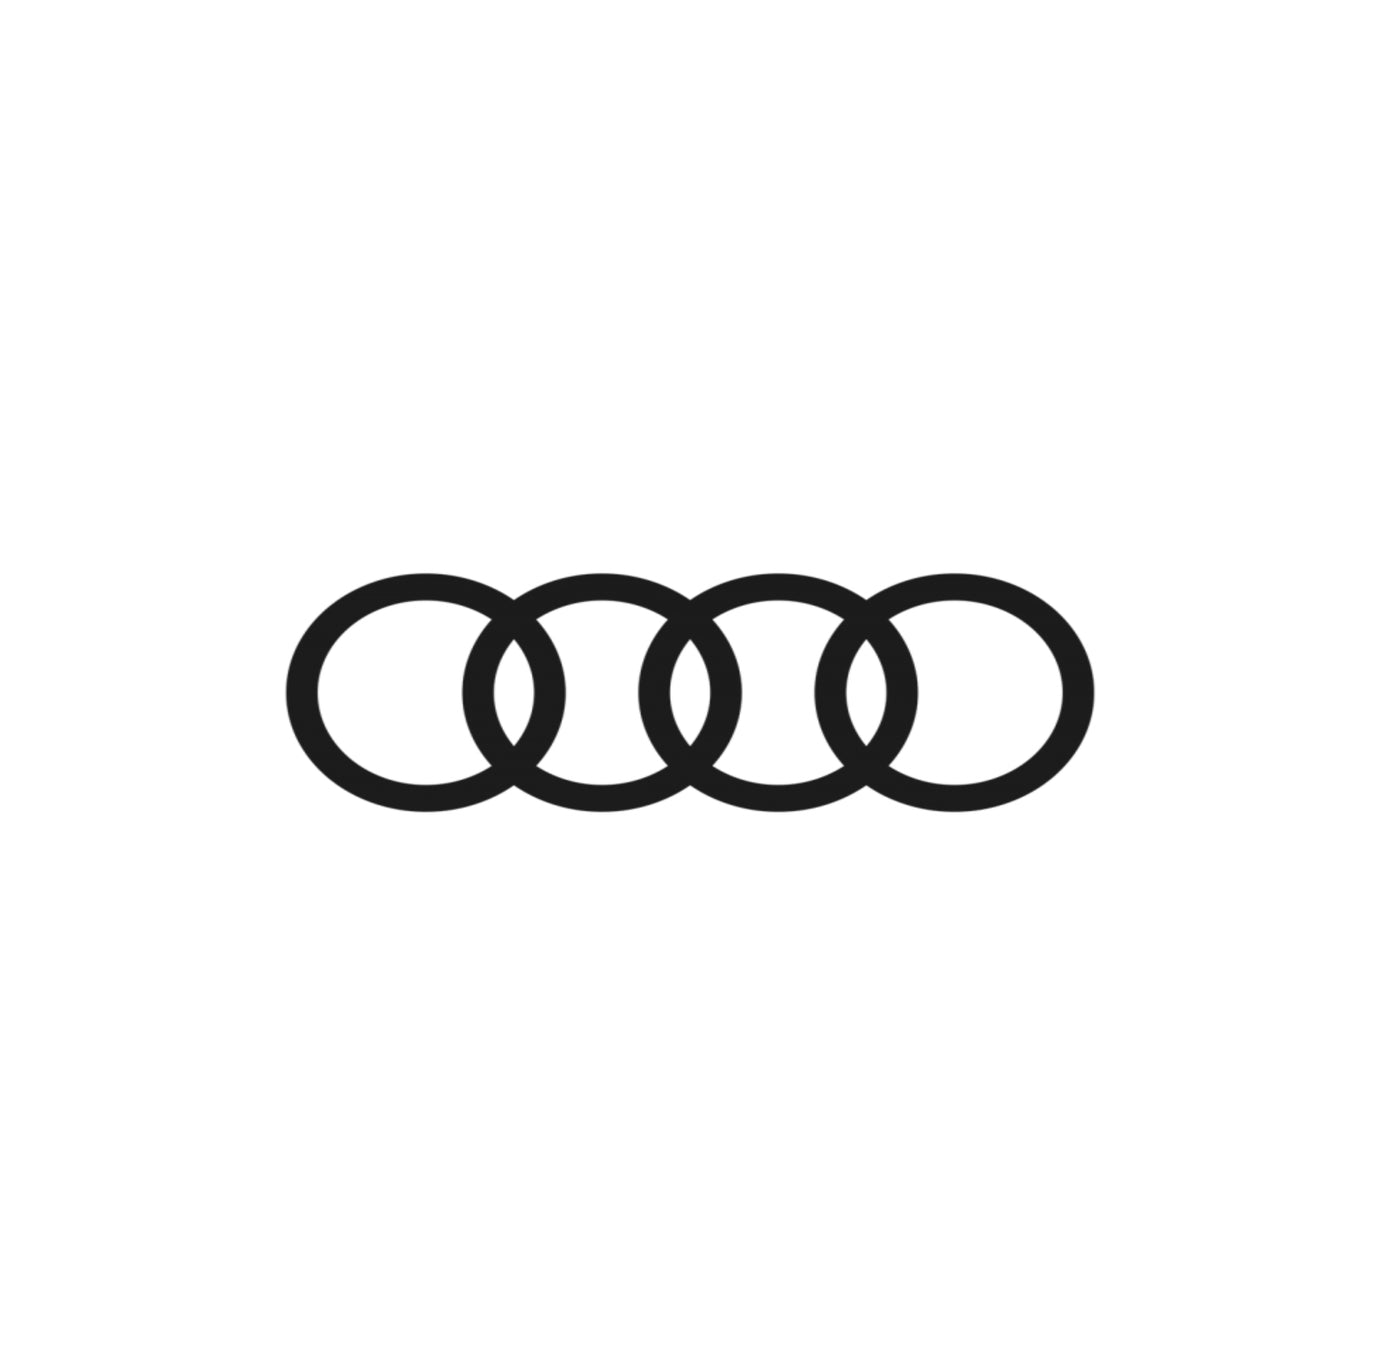 2x Audi Ringe Autoaufkleber Decal Tuning Sticker JDM –